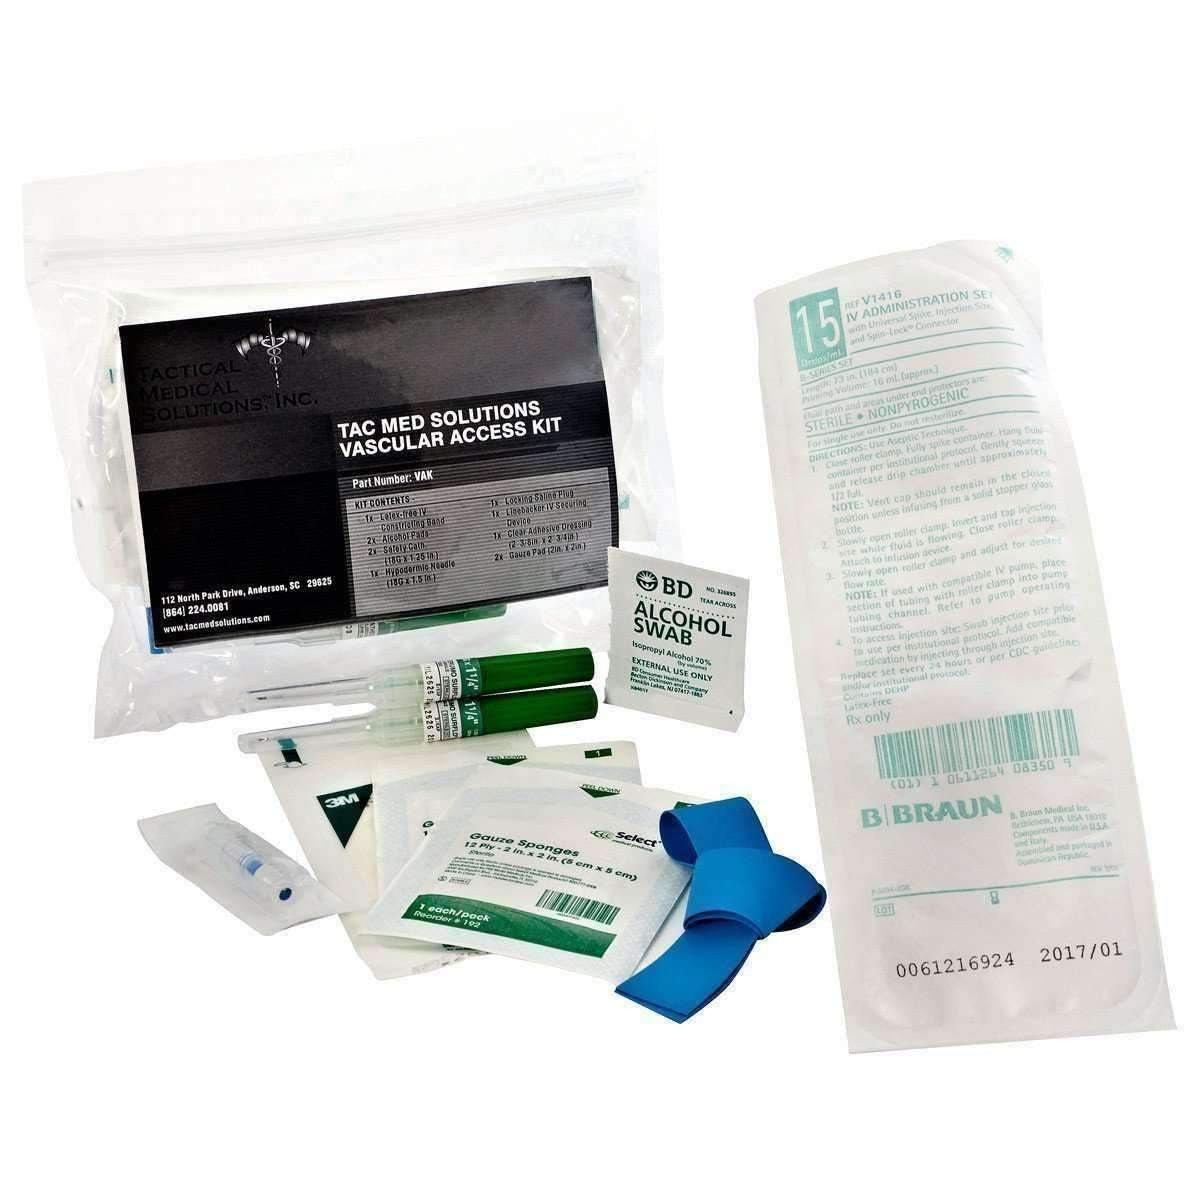 TacMed™ Vascular Access Kit - Vendor